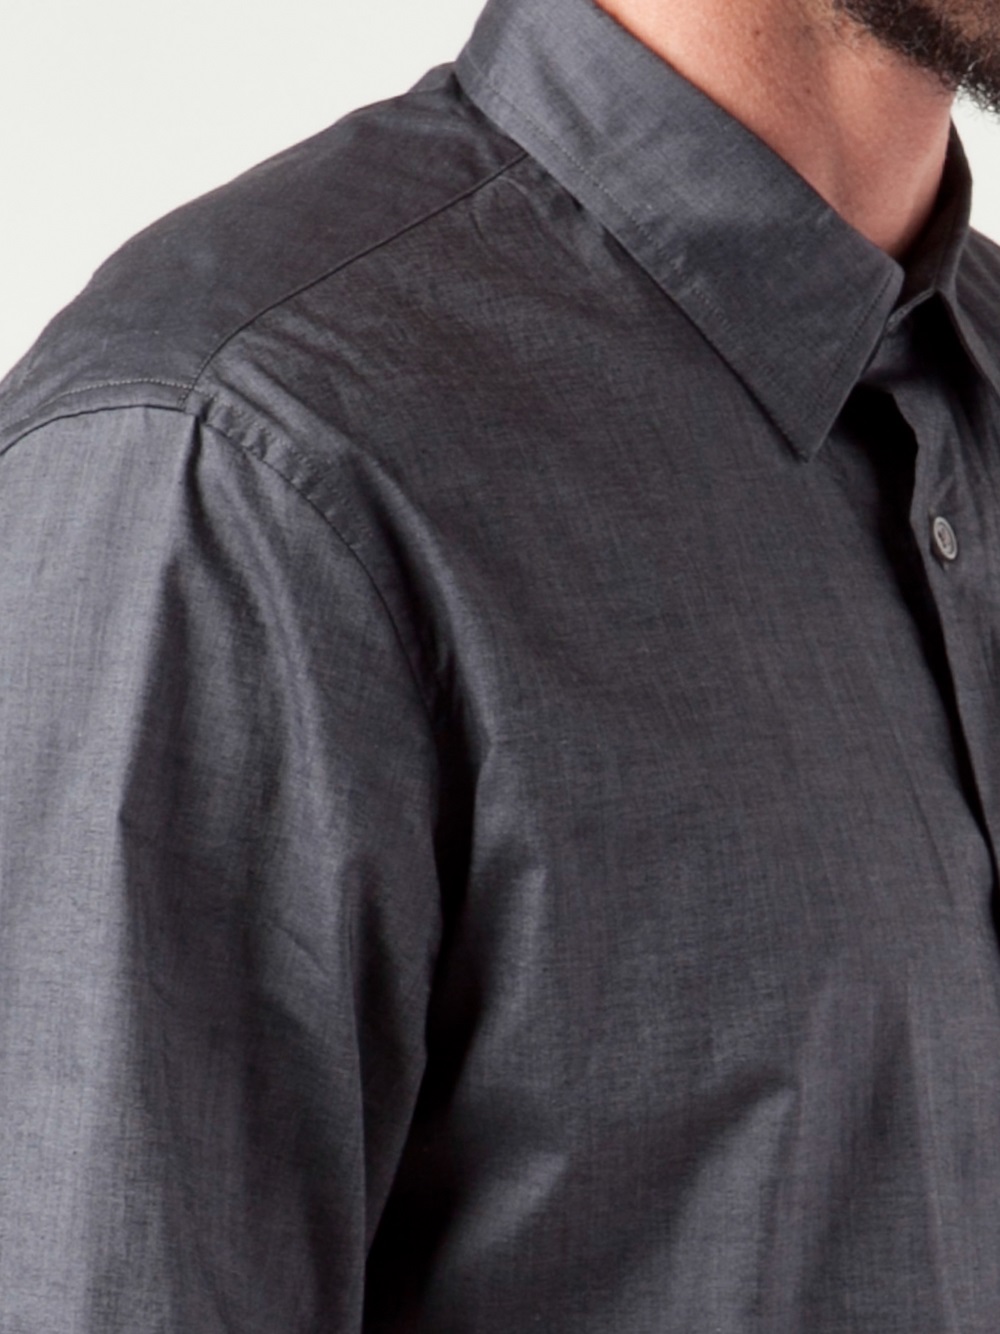 John Varvatos Button Down Shirt in Grey (Gray) for Men - Lyst